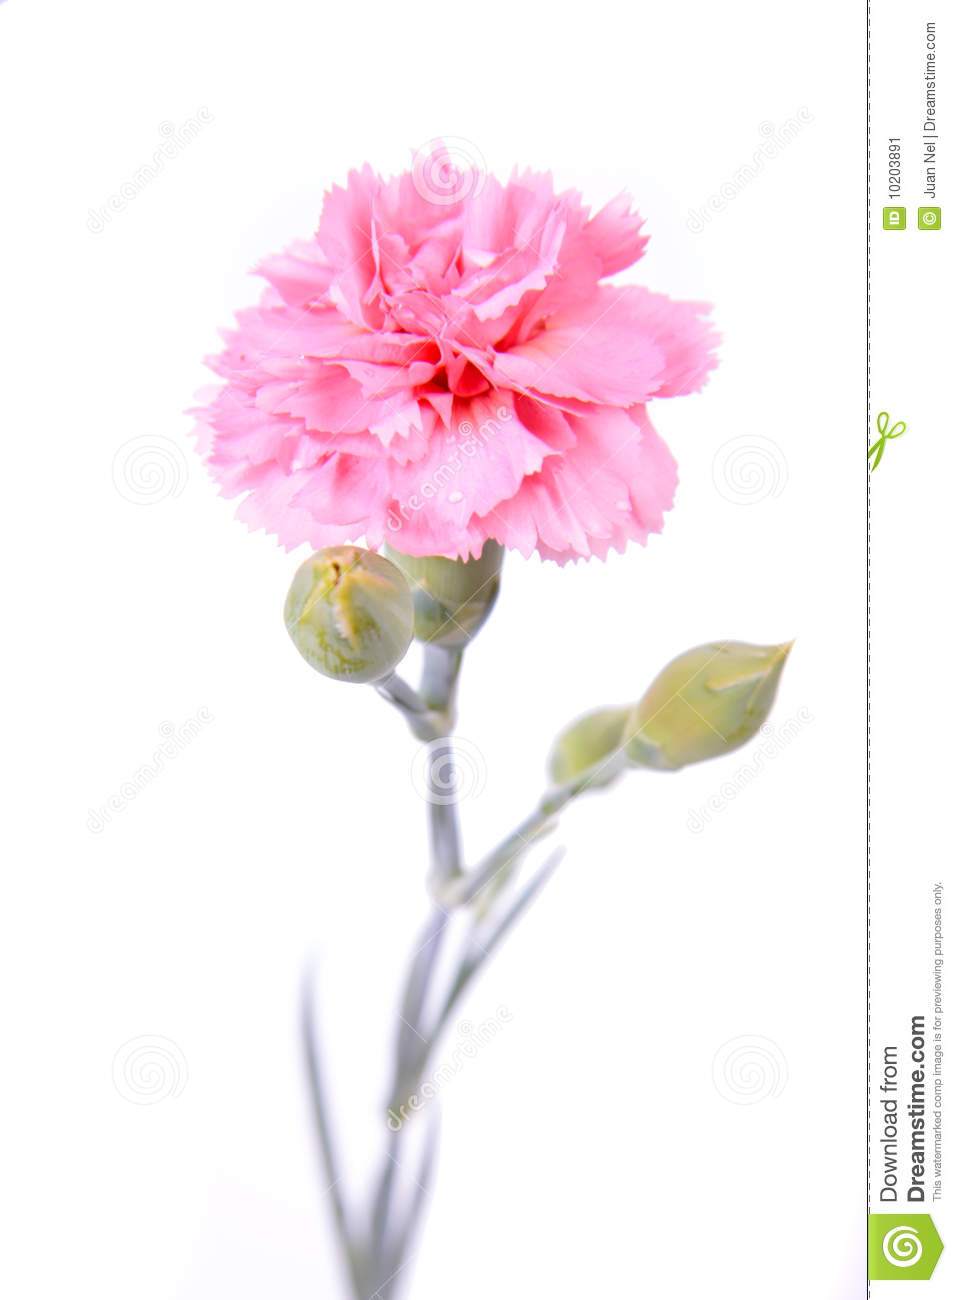 Pink Carnation  Stock Image   Image  10203891